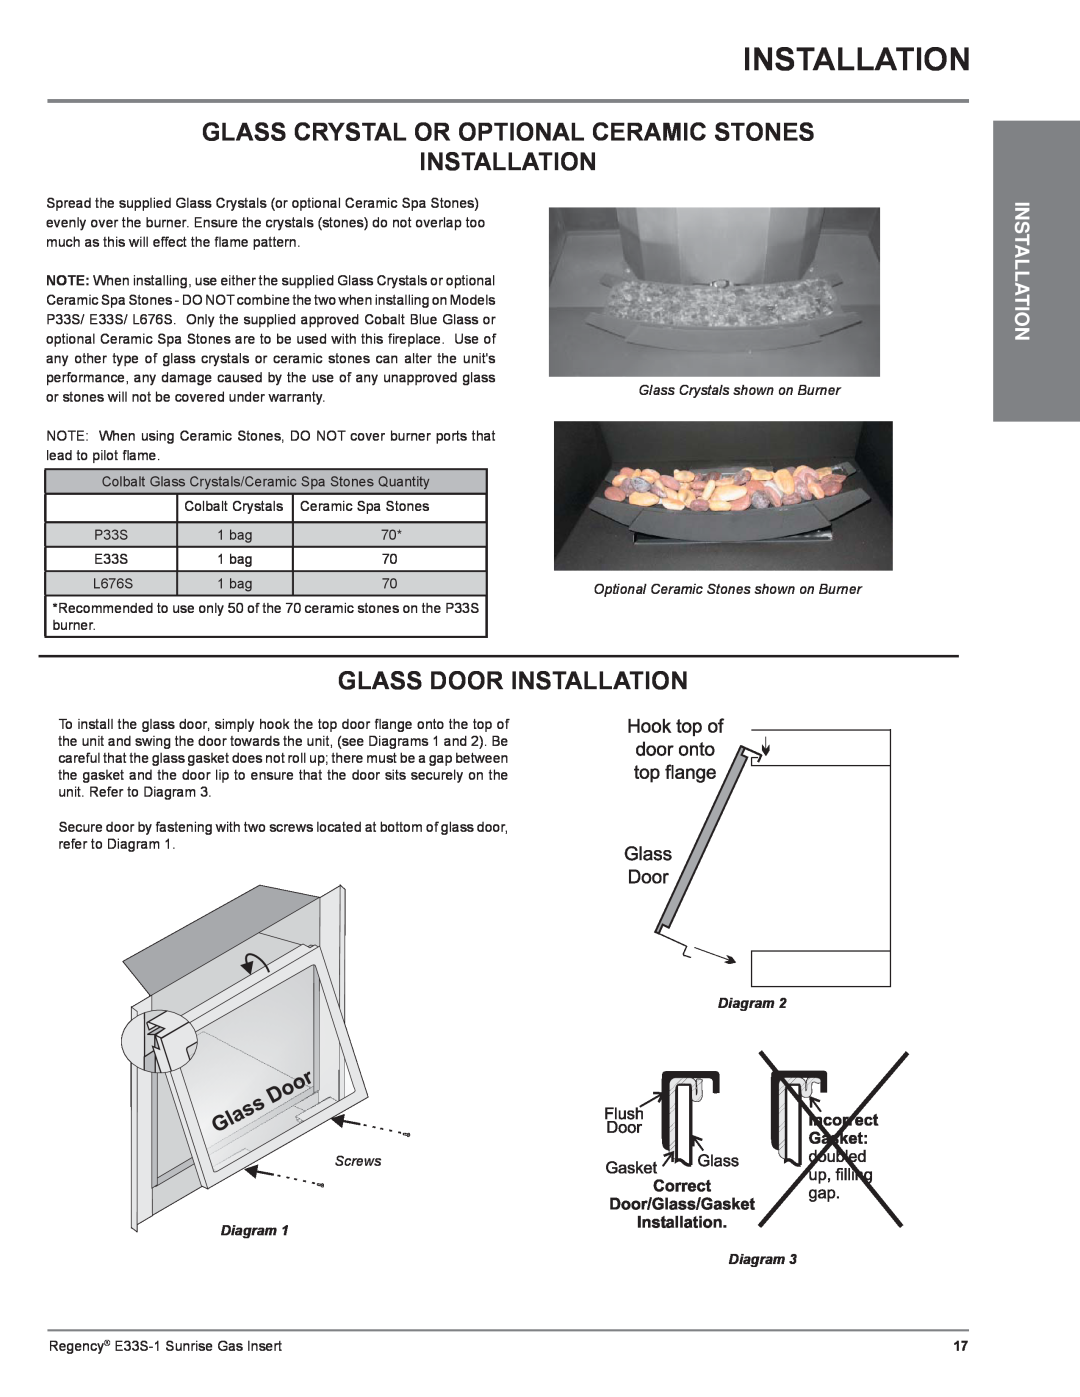 Regency E33S Glass Crystal Or Optional Ceramic Stones, Glass Door Installation, Glass Crystals shown on Burner, Screws 